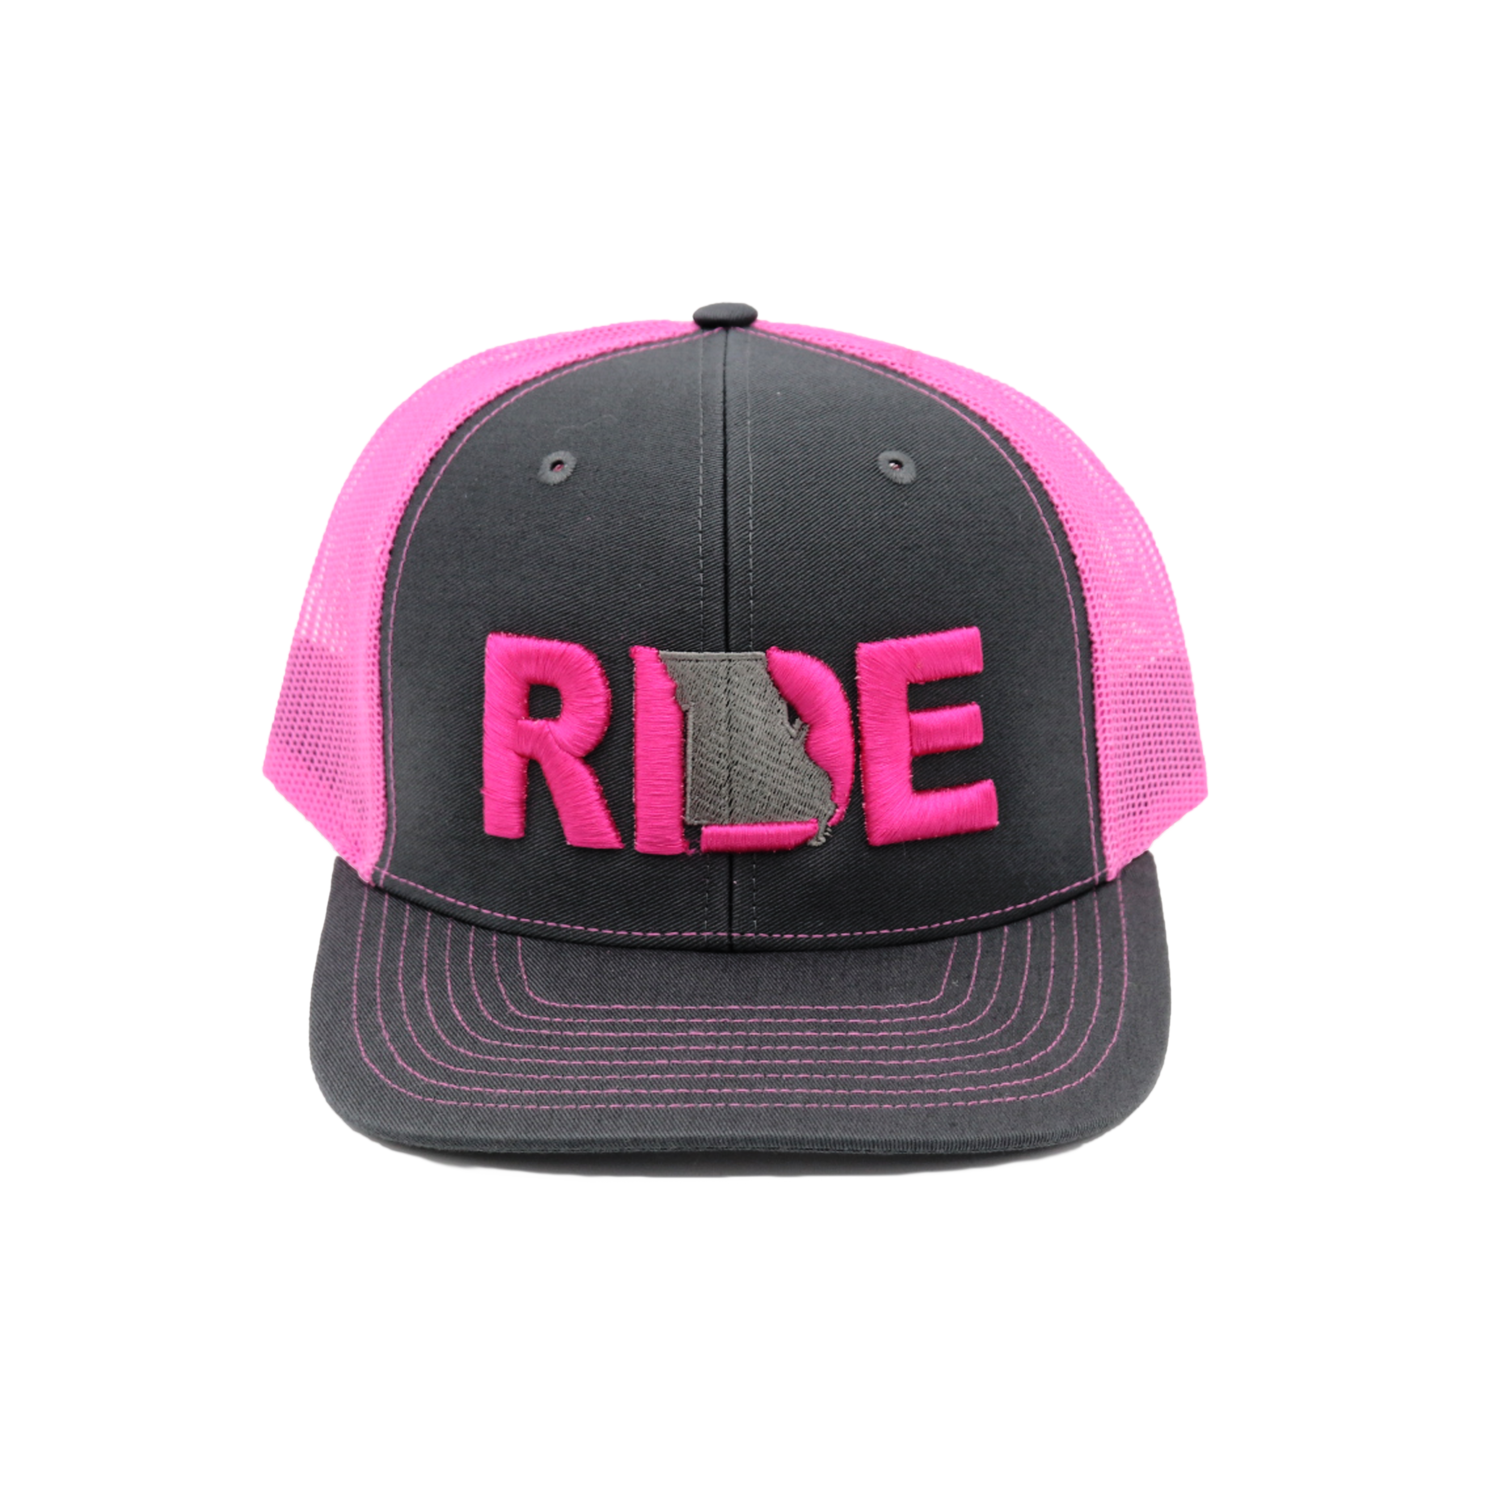 Ride Missouri Classic Embroidered Snapback Trucker Hat Gray/Pink